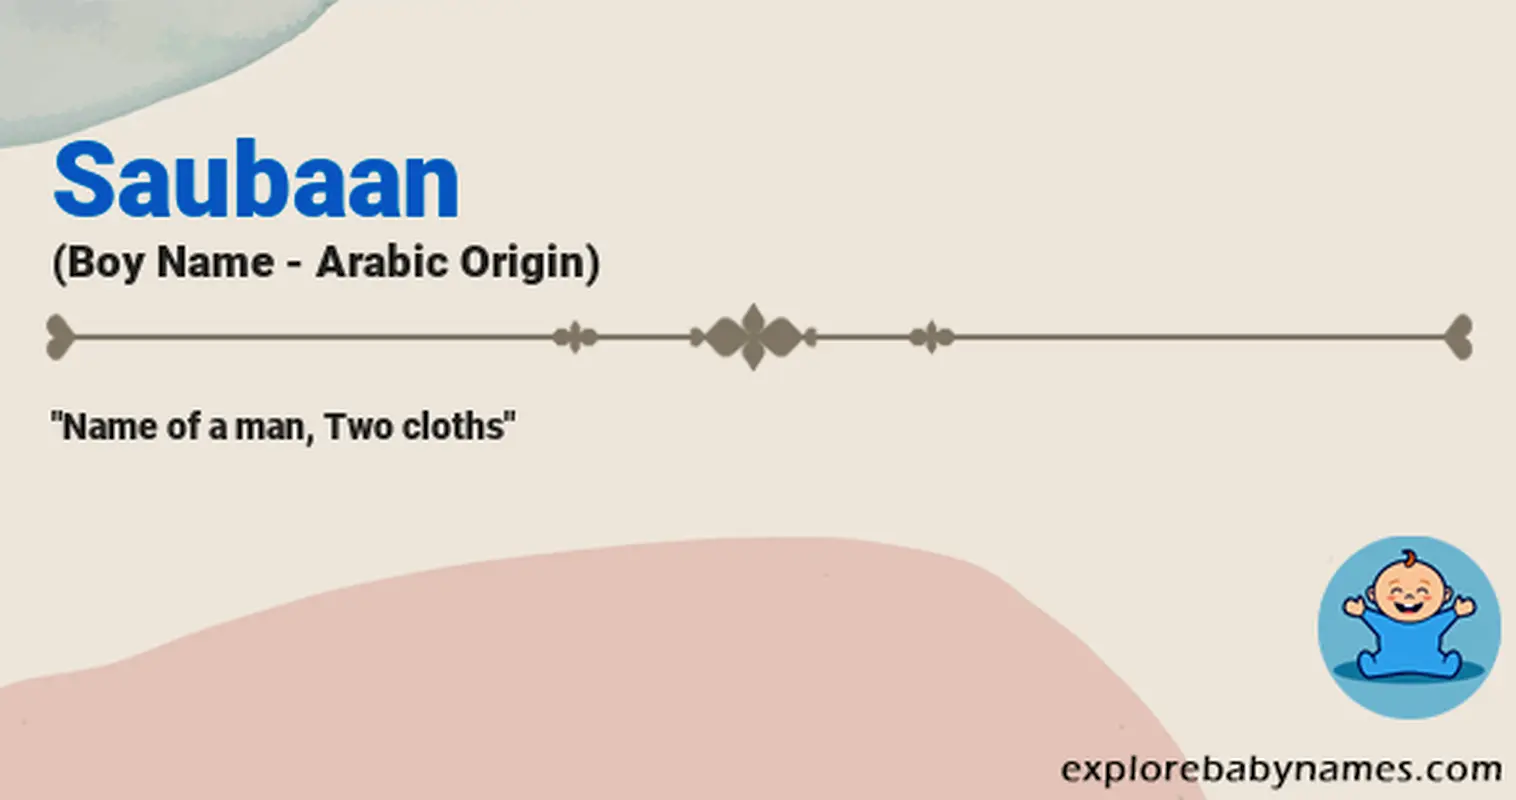 Meaning of Saubaan